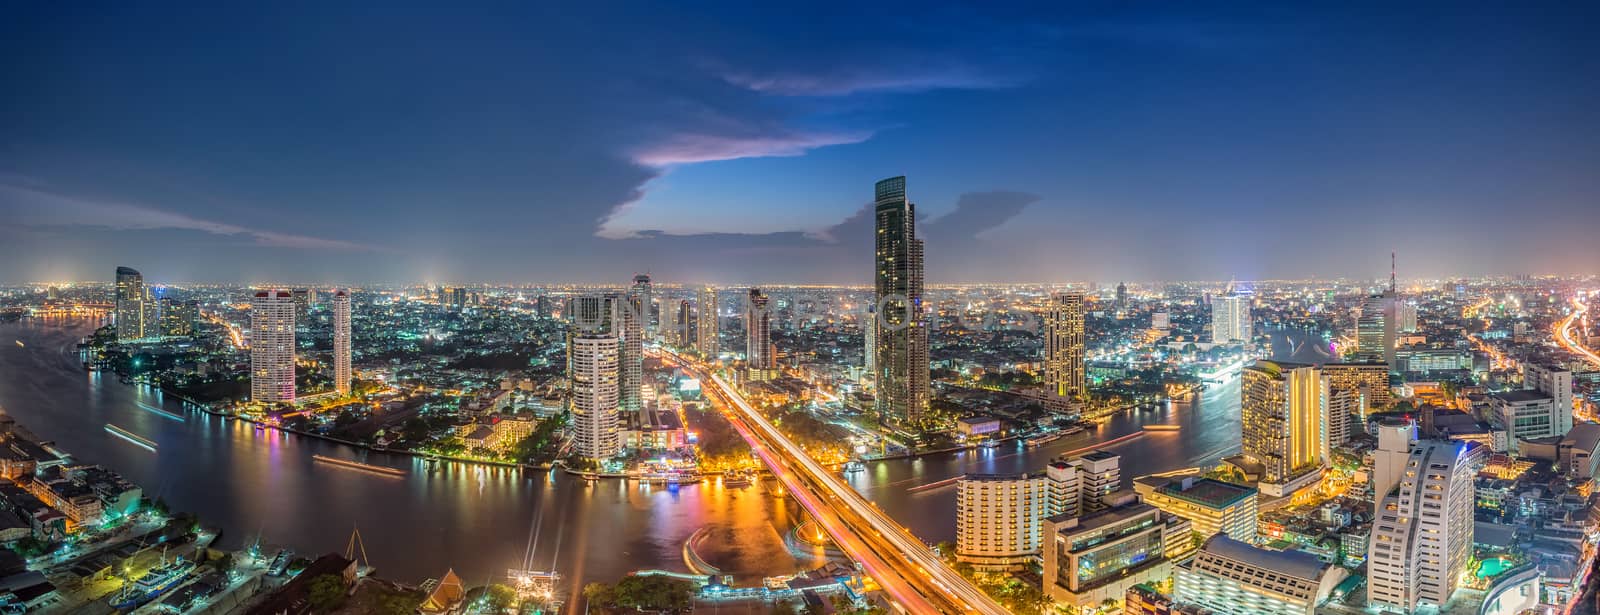 Bangkok Transportation at Dusk with Modern Business Building along the river (Thailand)-Panorama